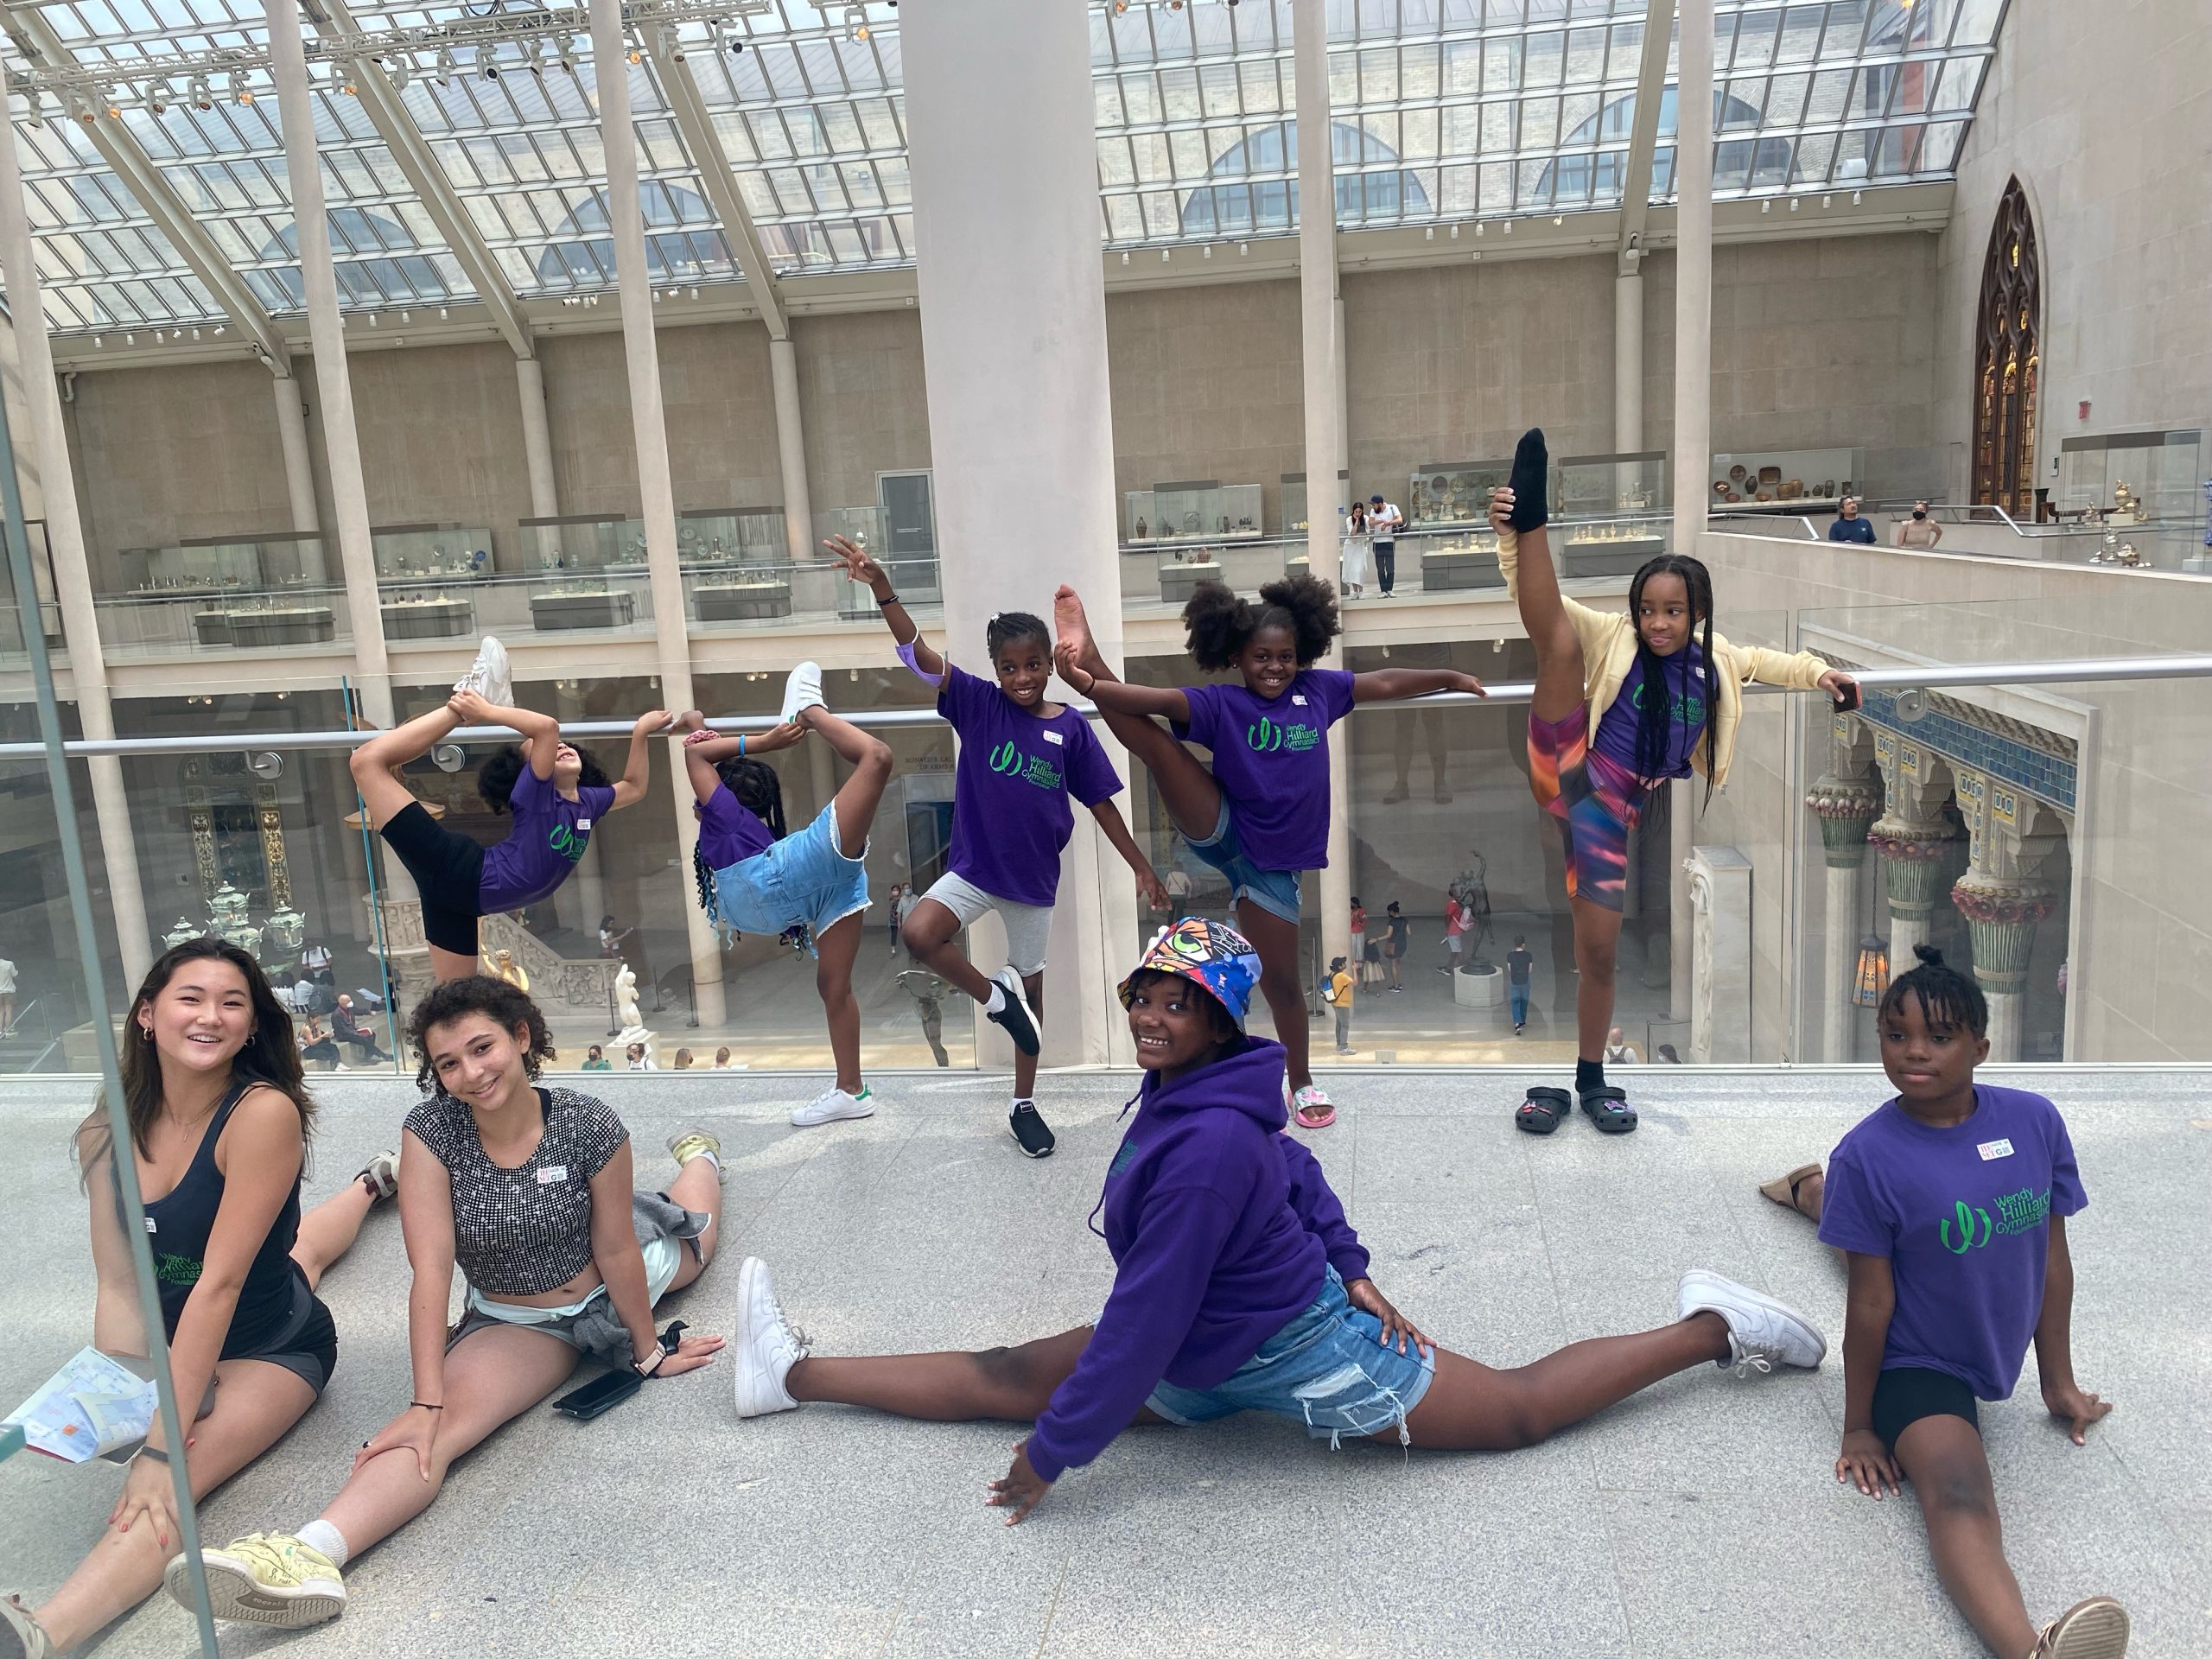 Wendy Hilliard Gymnastics Foundation provides summer instruction in Harlem